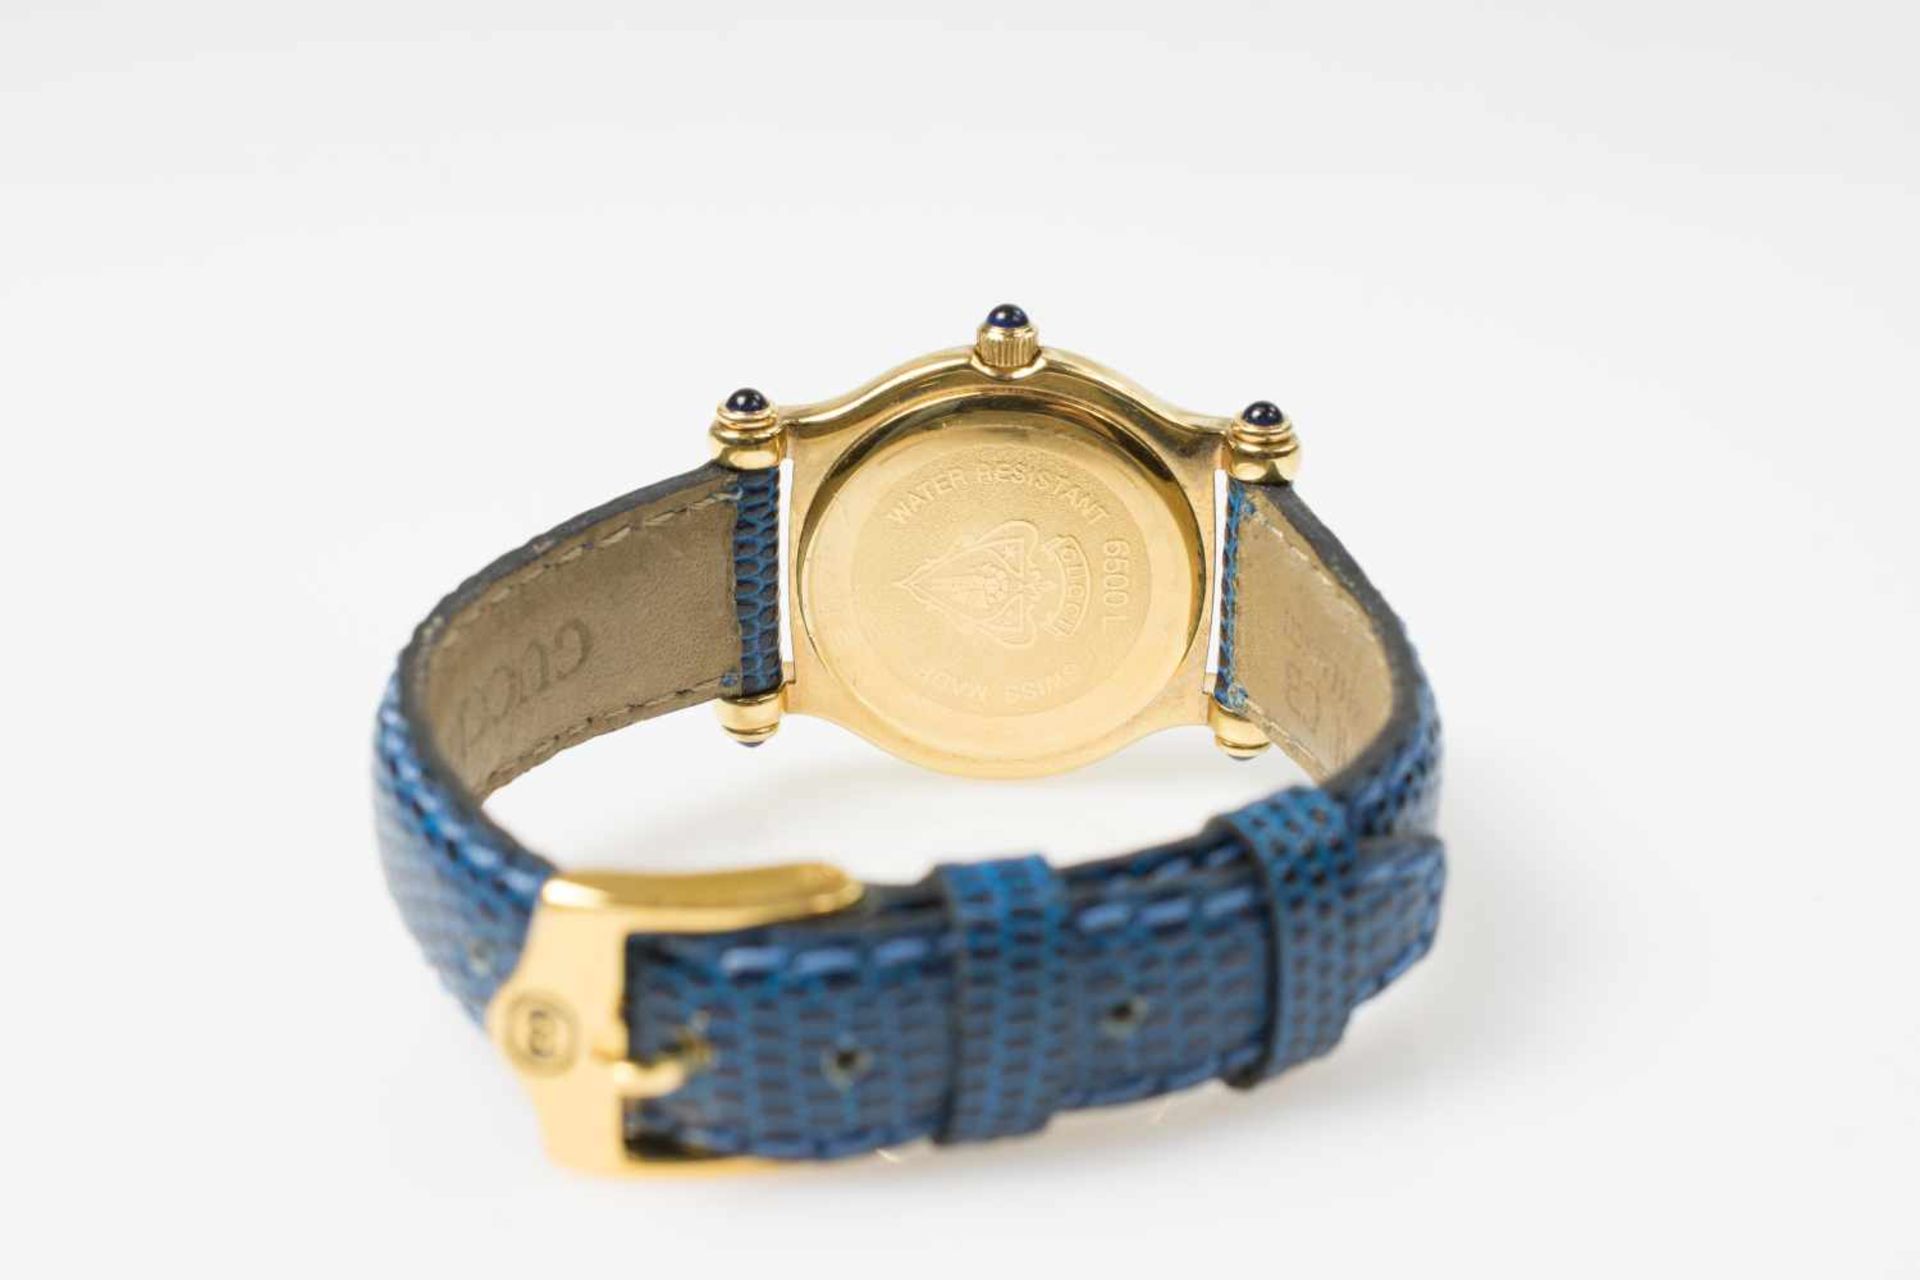 Gucci Damenarmbanduhr, 6500L, um 1990, Quarz, Gehäuse vergoldet, Durchmesser 26 mm, Armband Leder, - Image 2 of 2